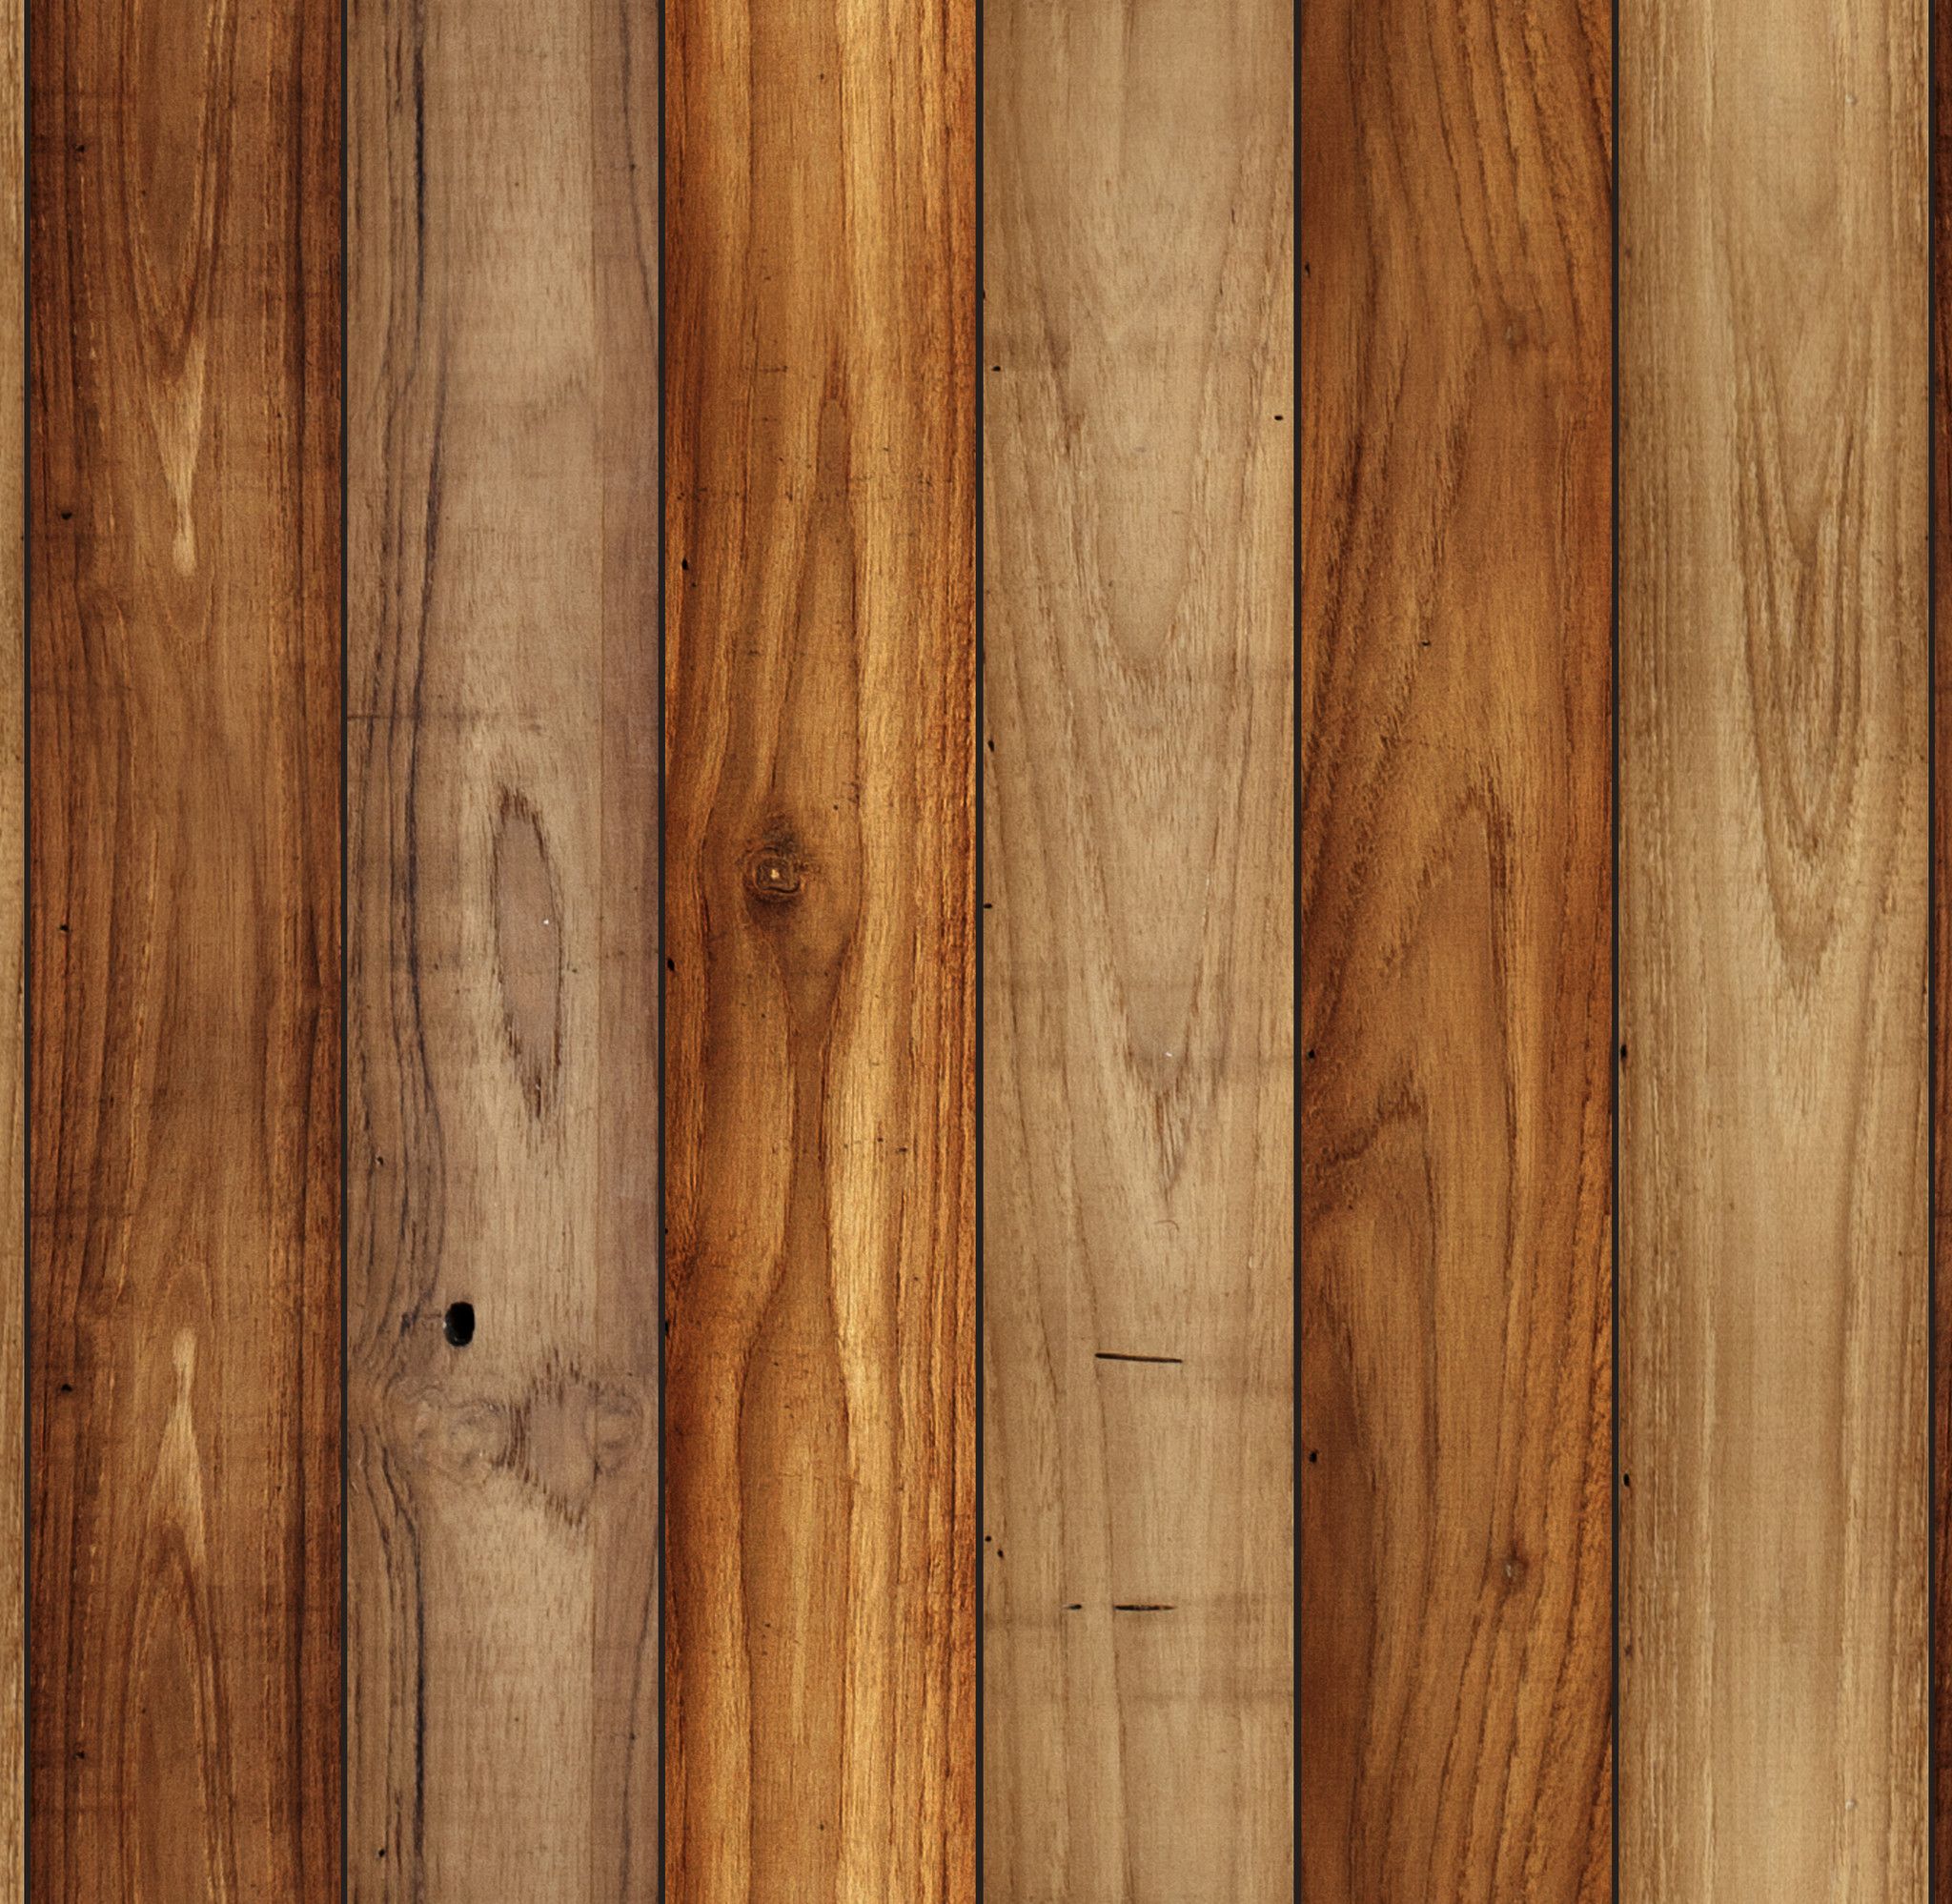 wood panel effect wallpaper,wood,hardwood,wood stain,lumber,plank